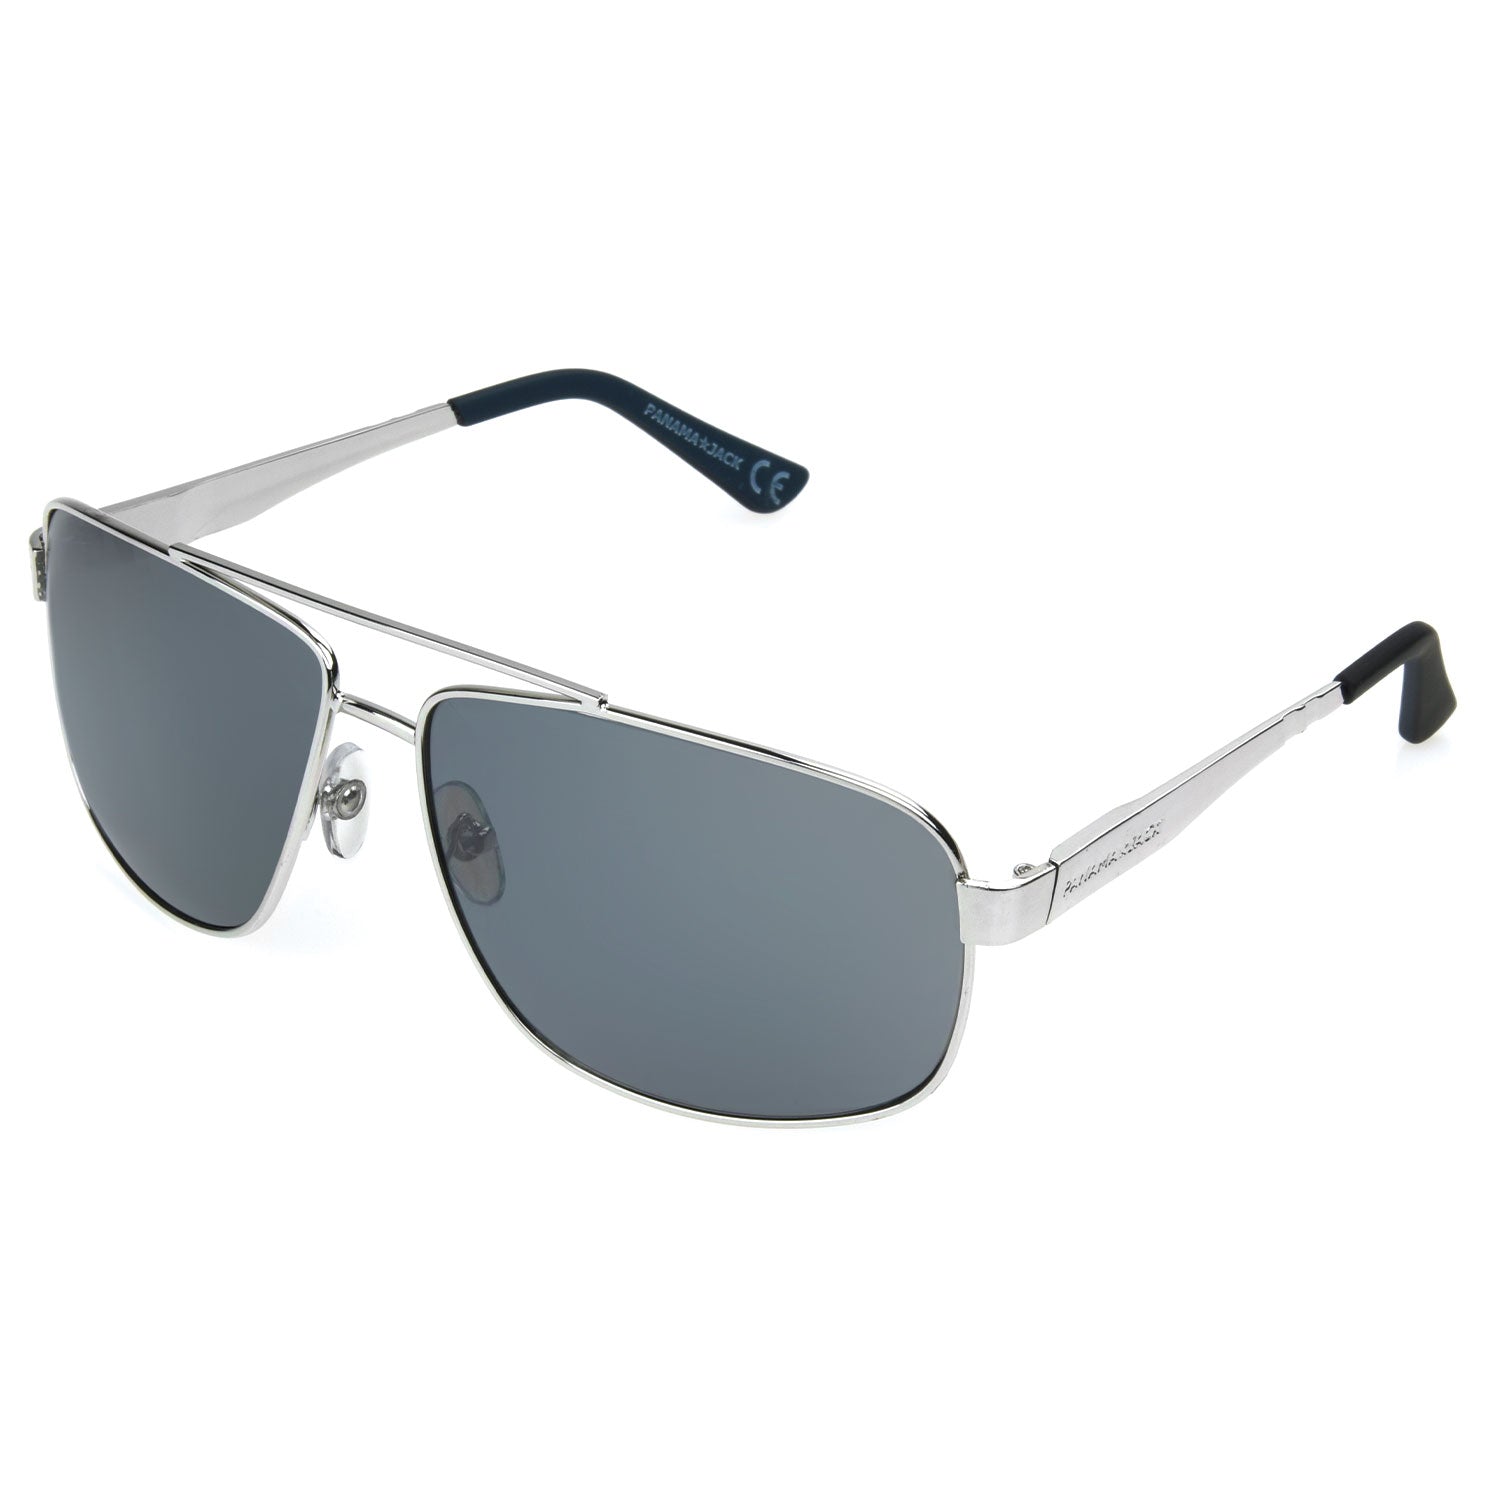 Panama Jack Metal Aviator Sunglasses - Silver Frames, 100% UVA - UVB Sun Protection, Impact Resistant Lenses